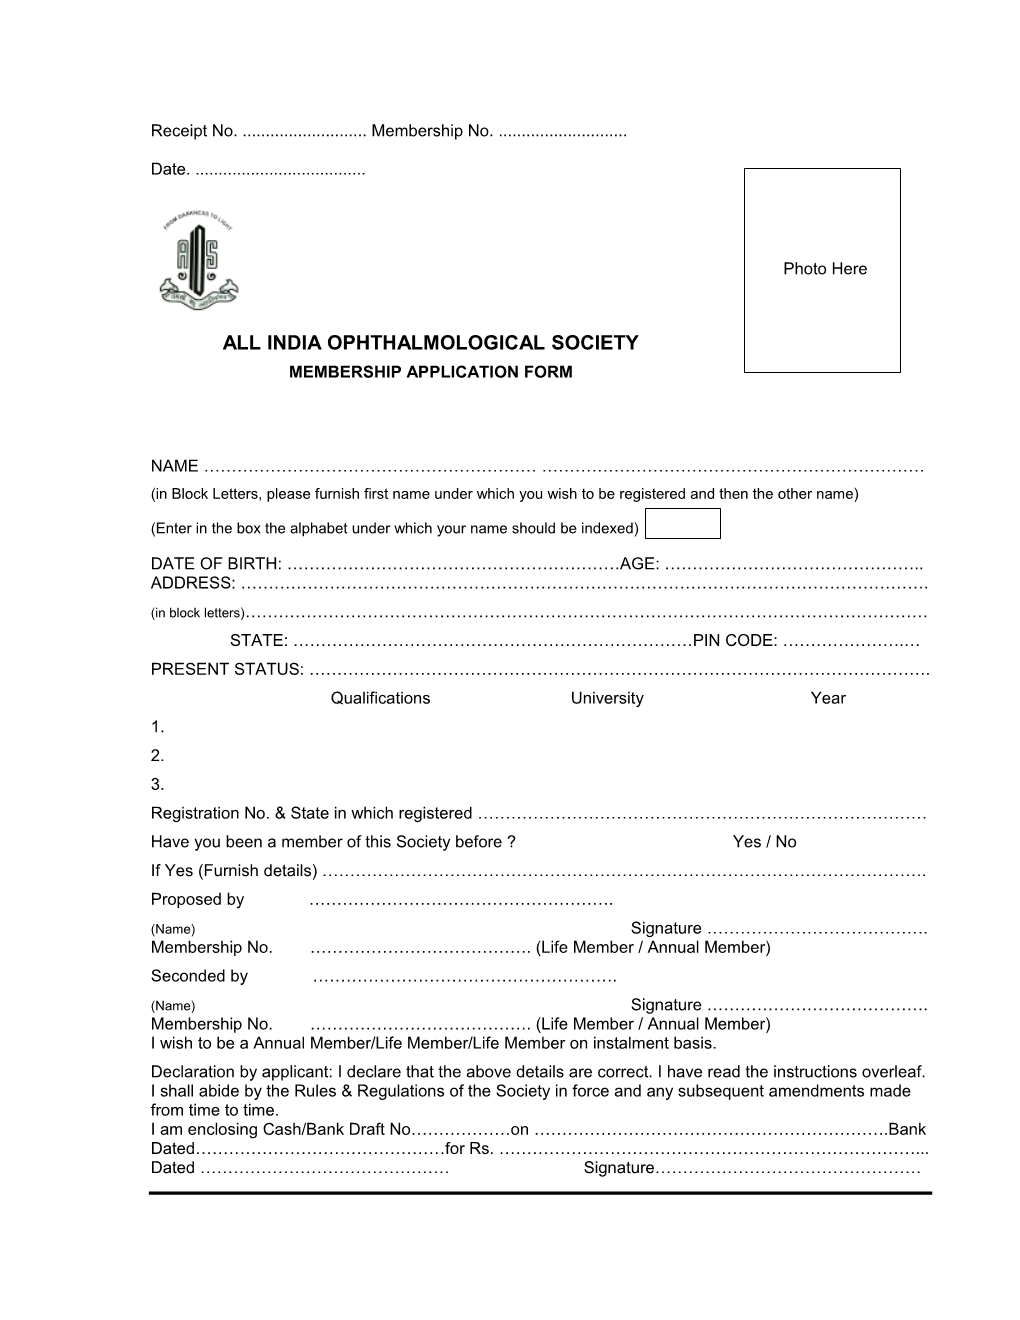 ALL INDIA Membership Application Form